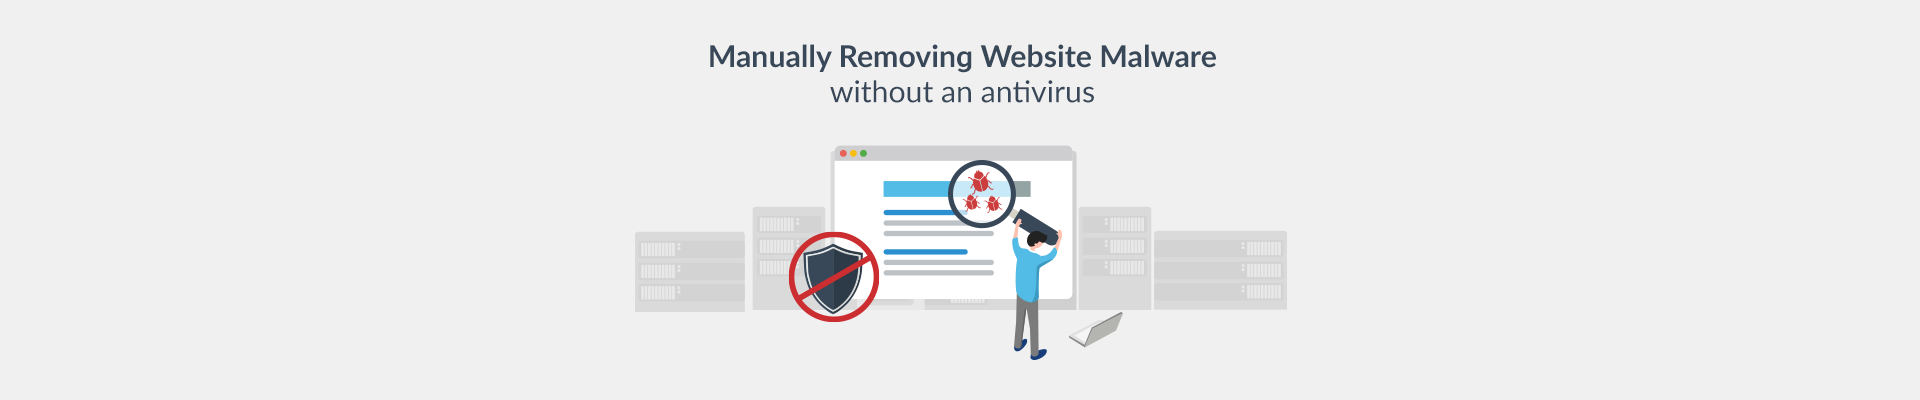 Remove website malware